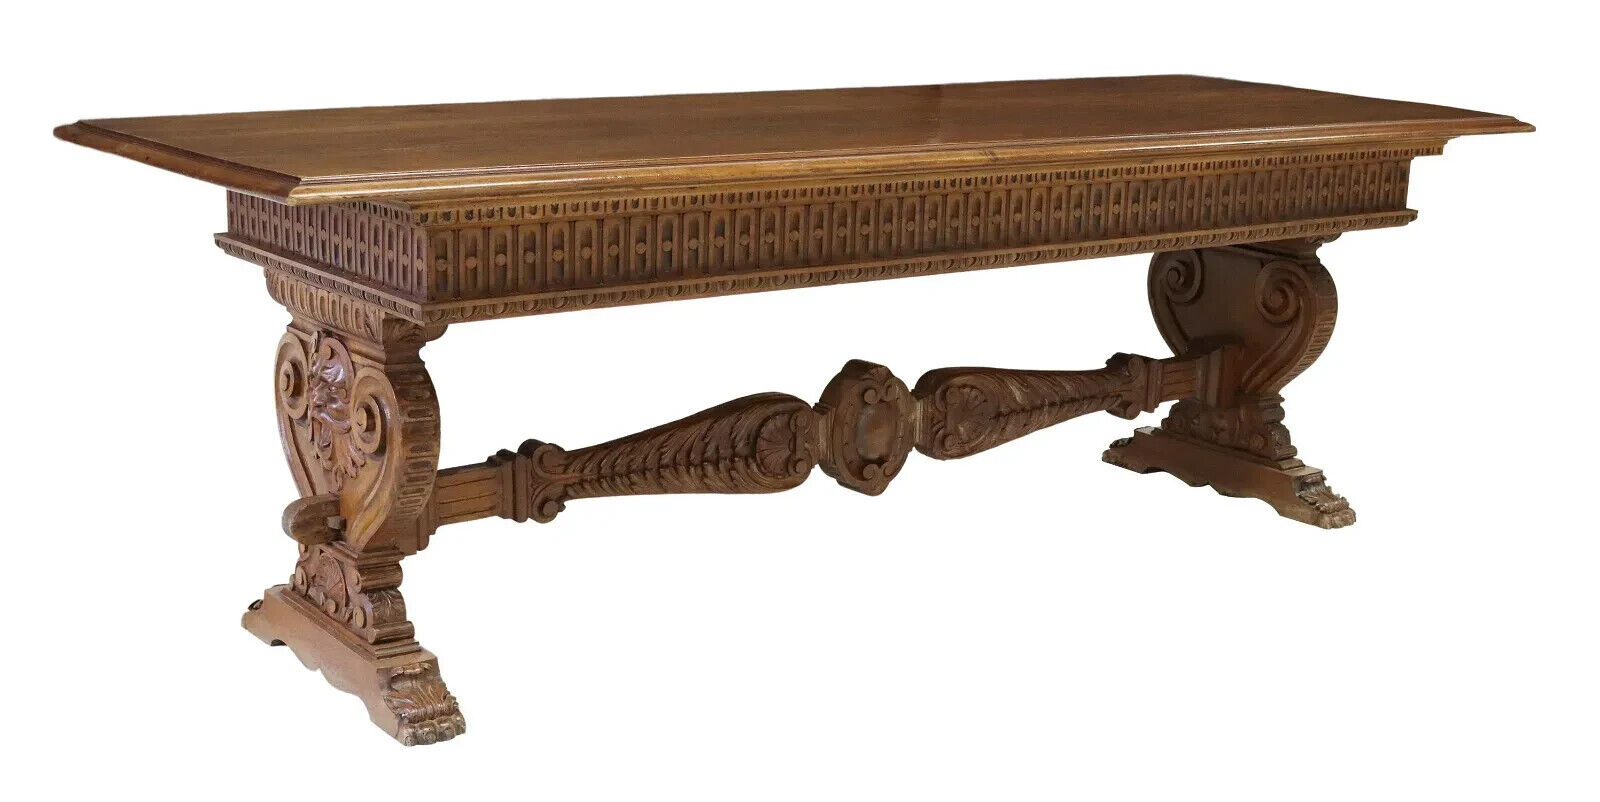 Antique Table, Monumental Renaissance Revival Walnut, Volute Support, 1800s